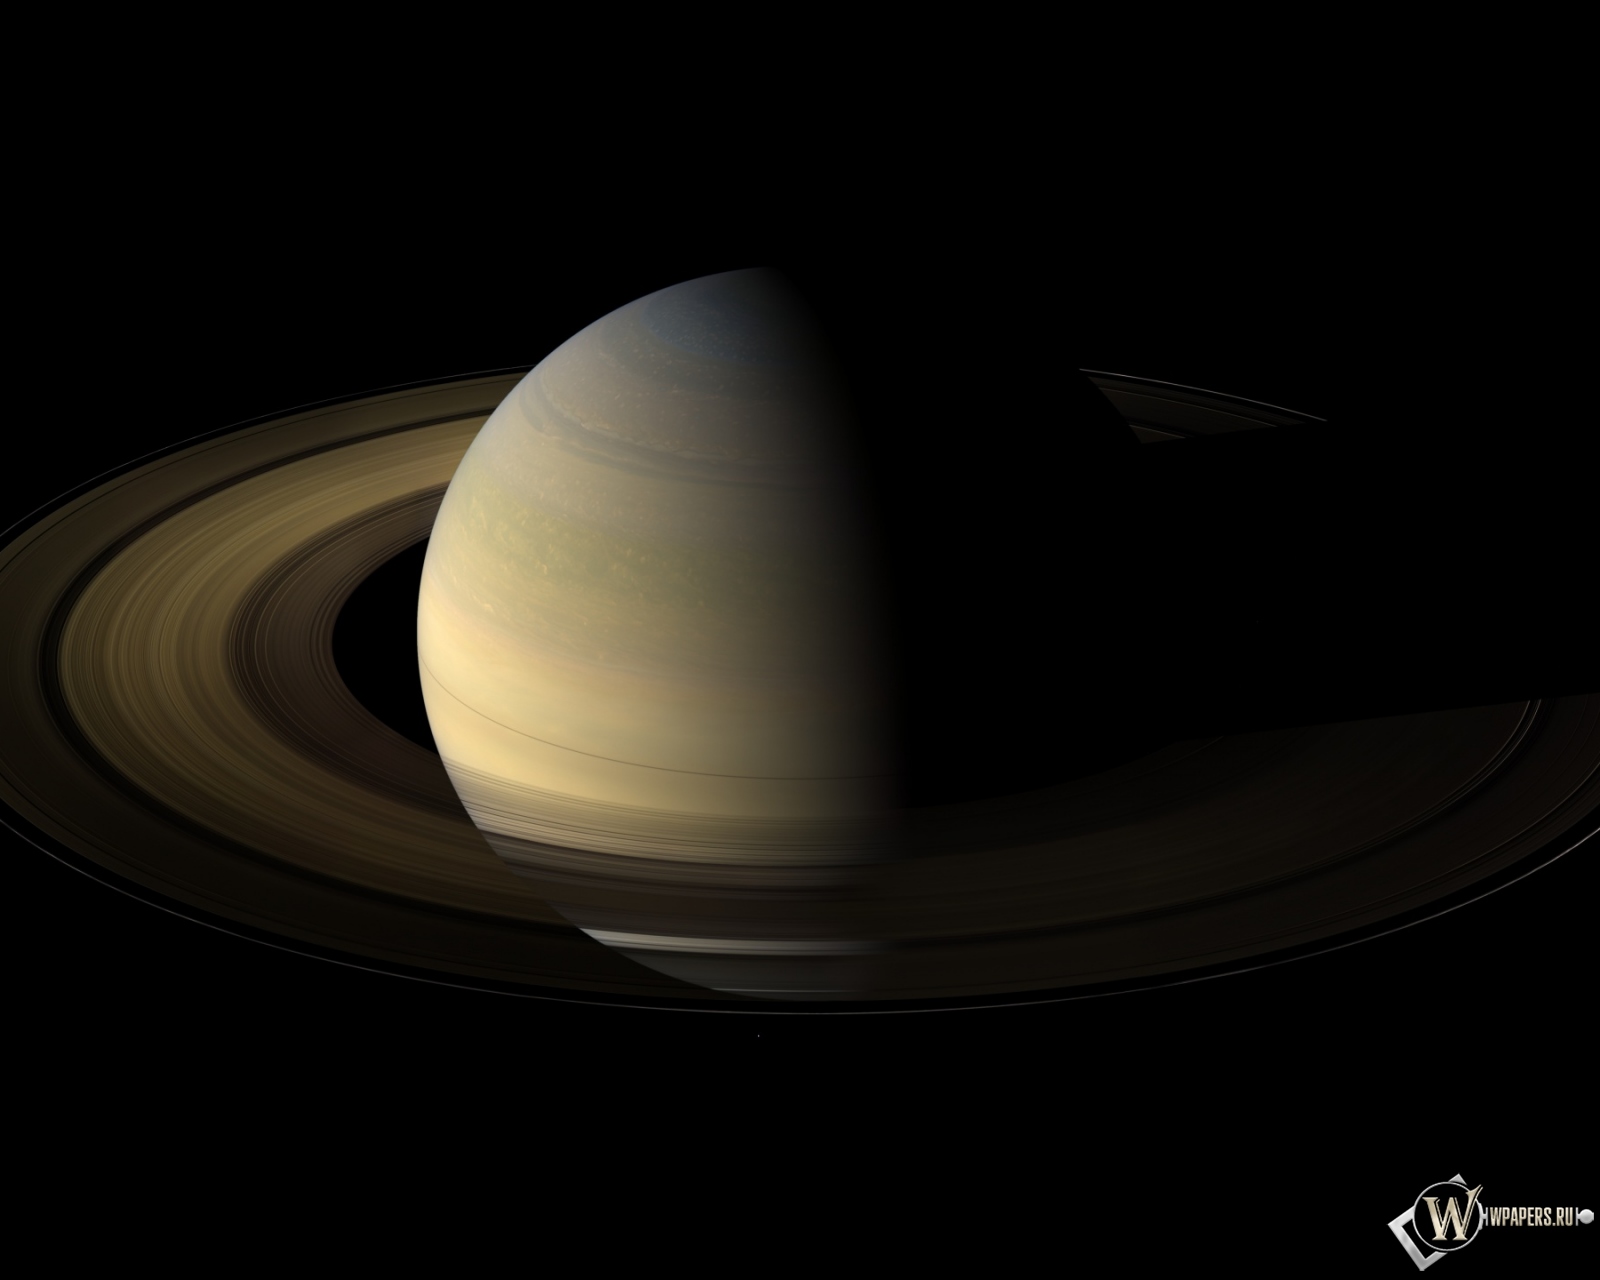 Кольца Сатурна 1600x1280